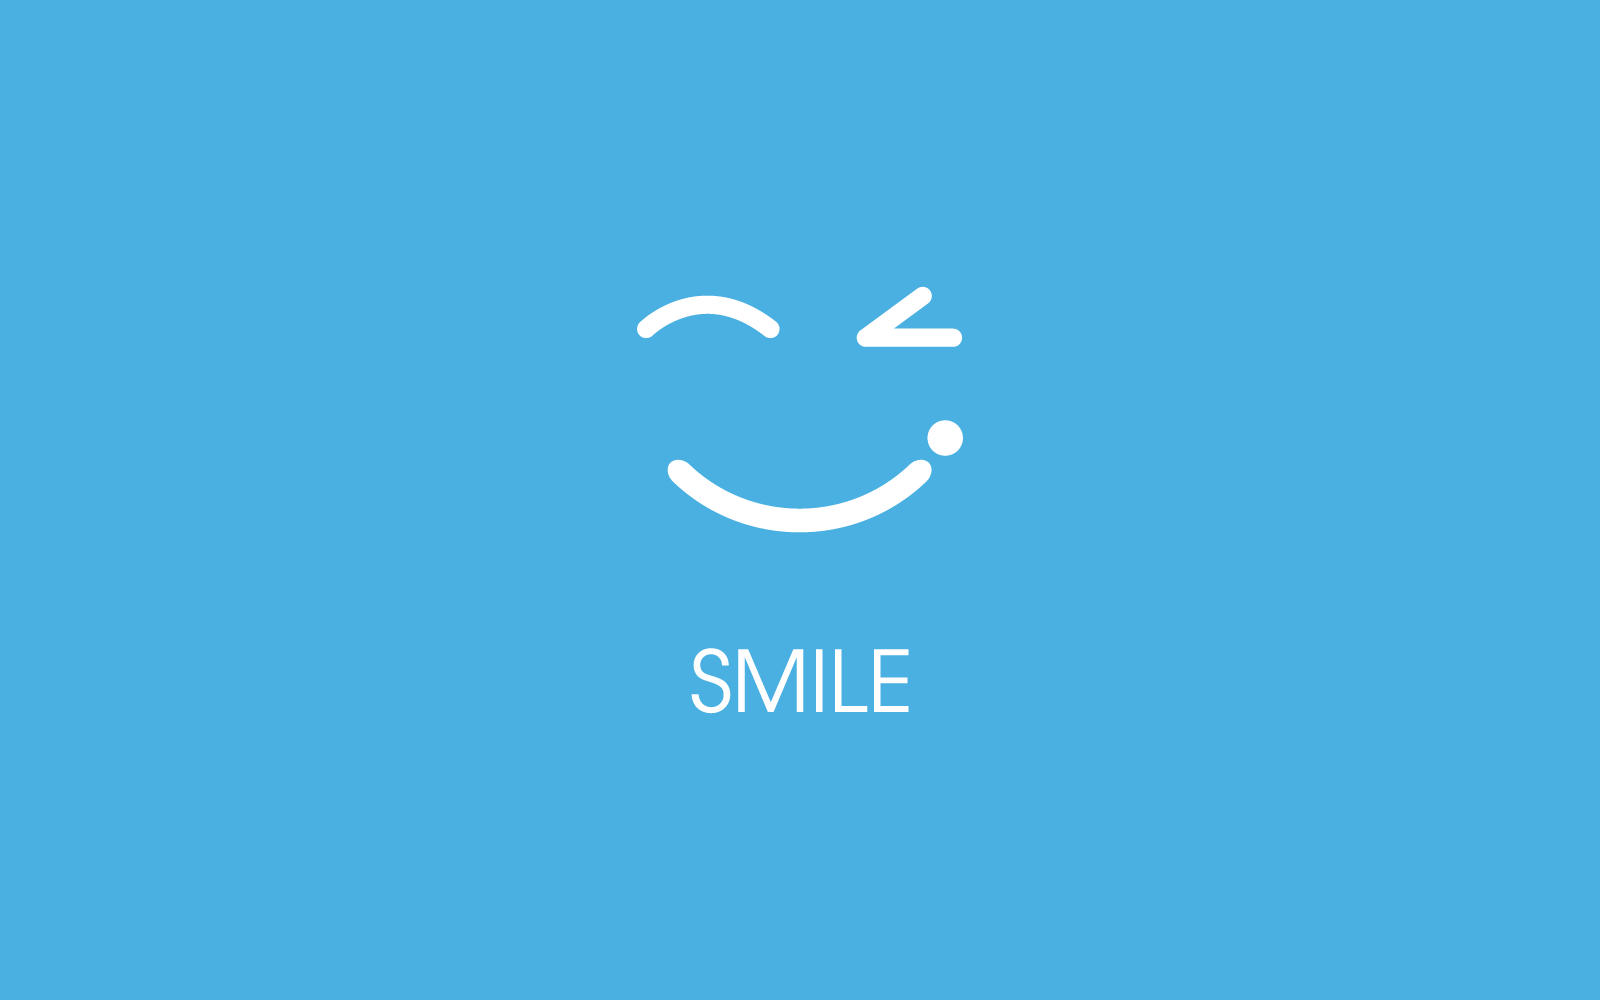 Smile happy face emoticon illustration vector design